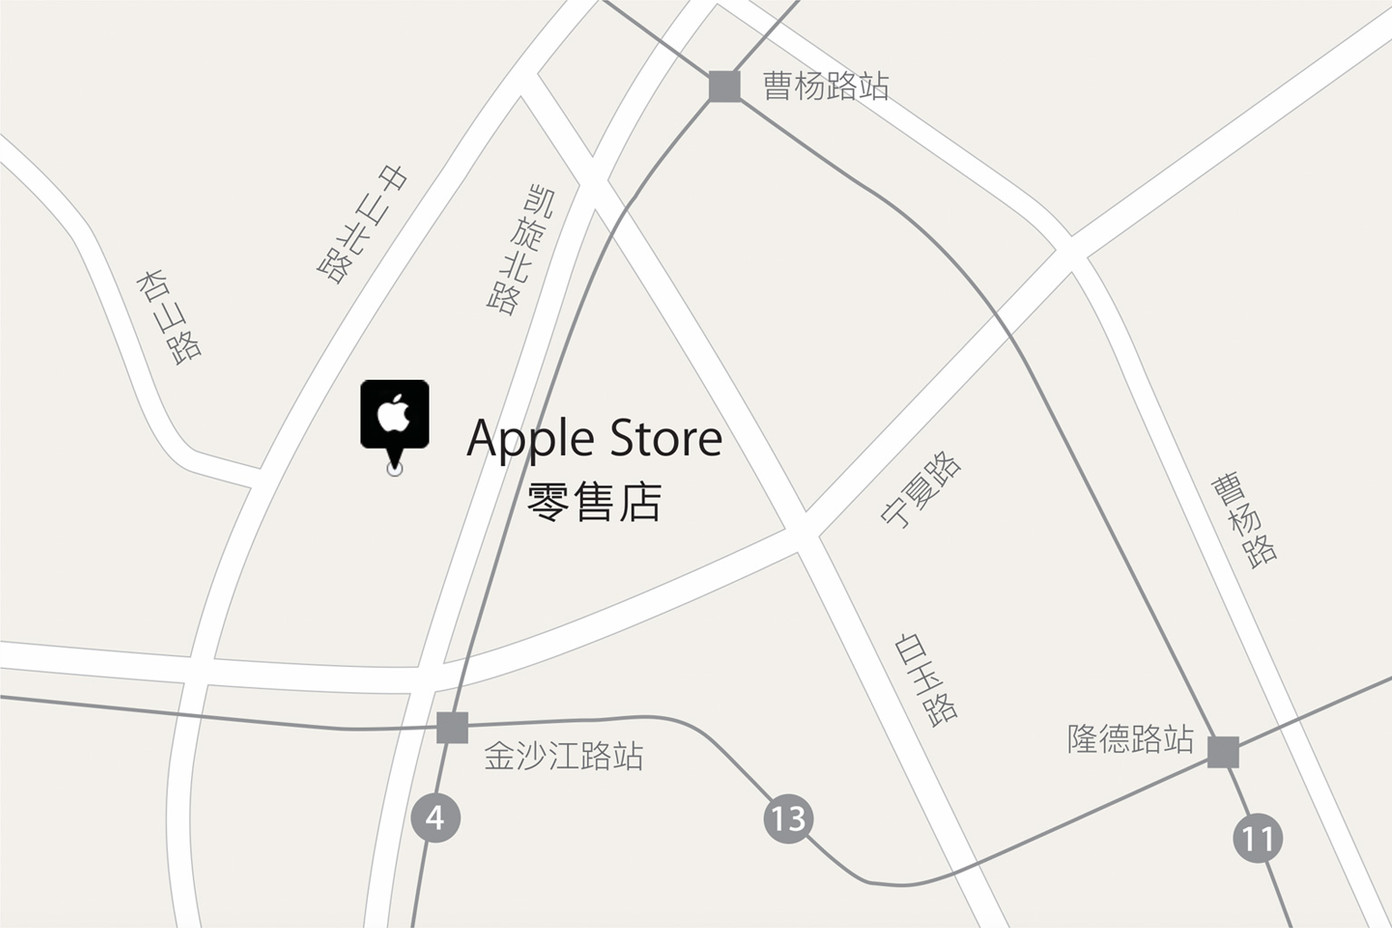 环球港 Apple Store 零售店